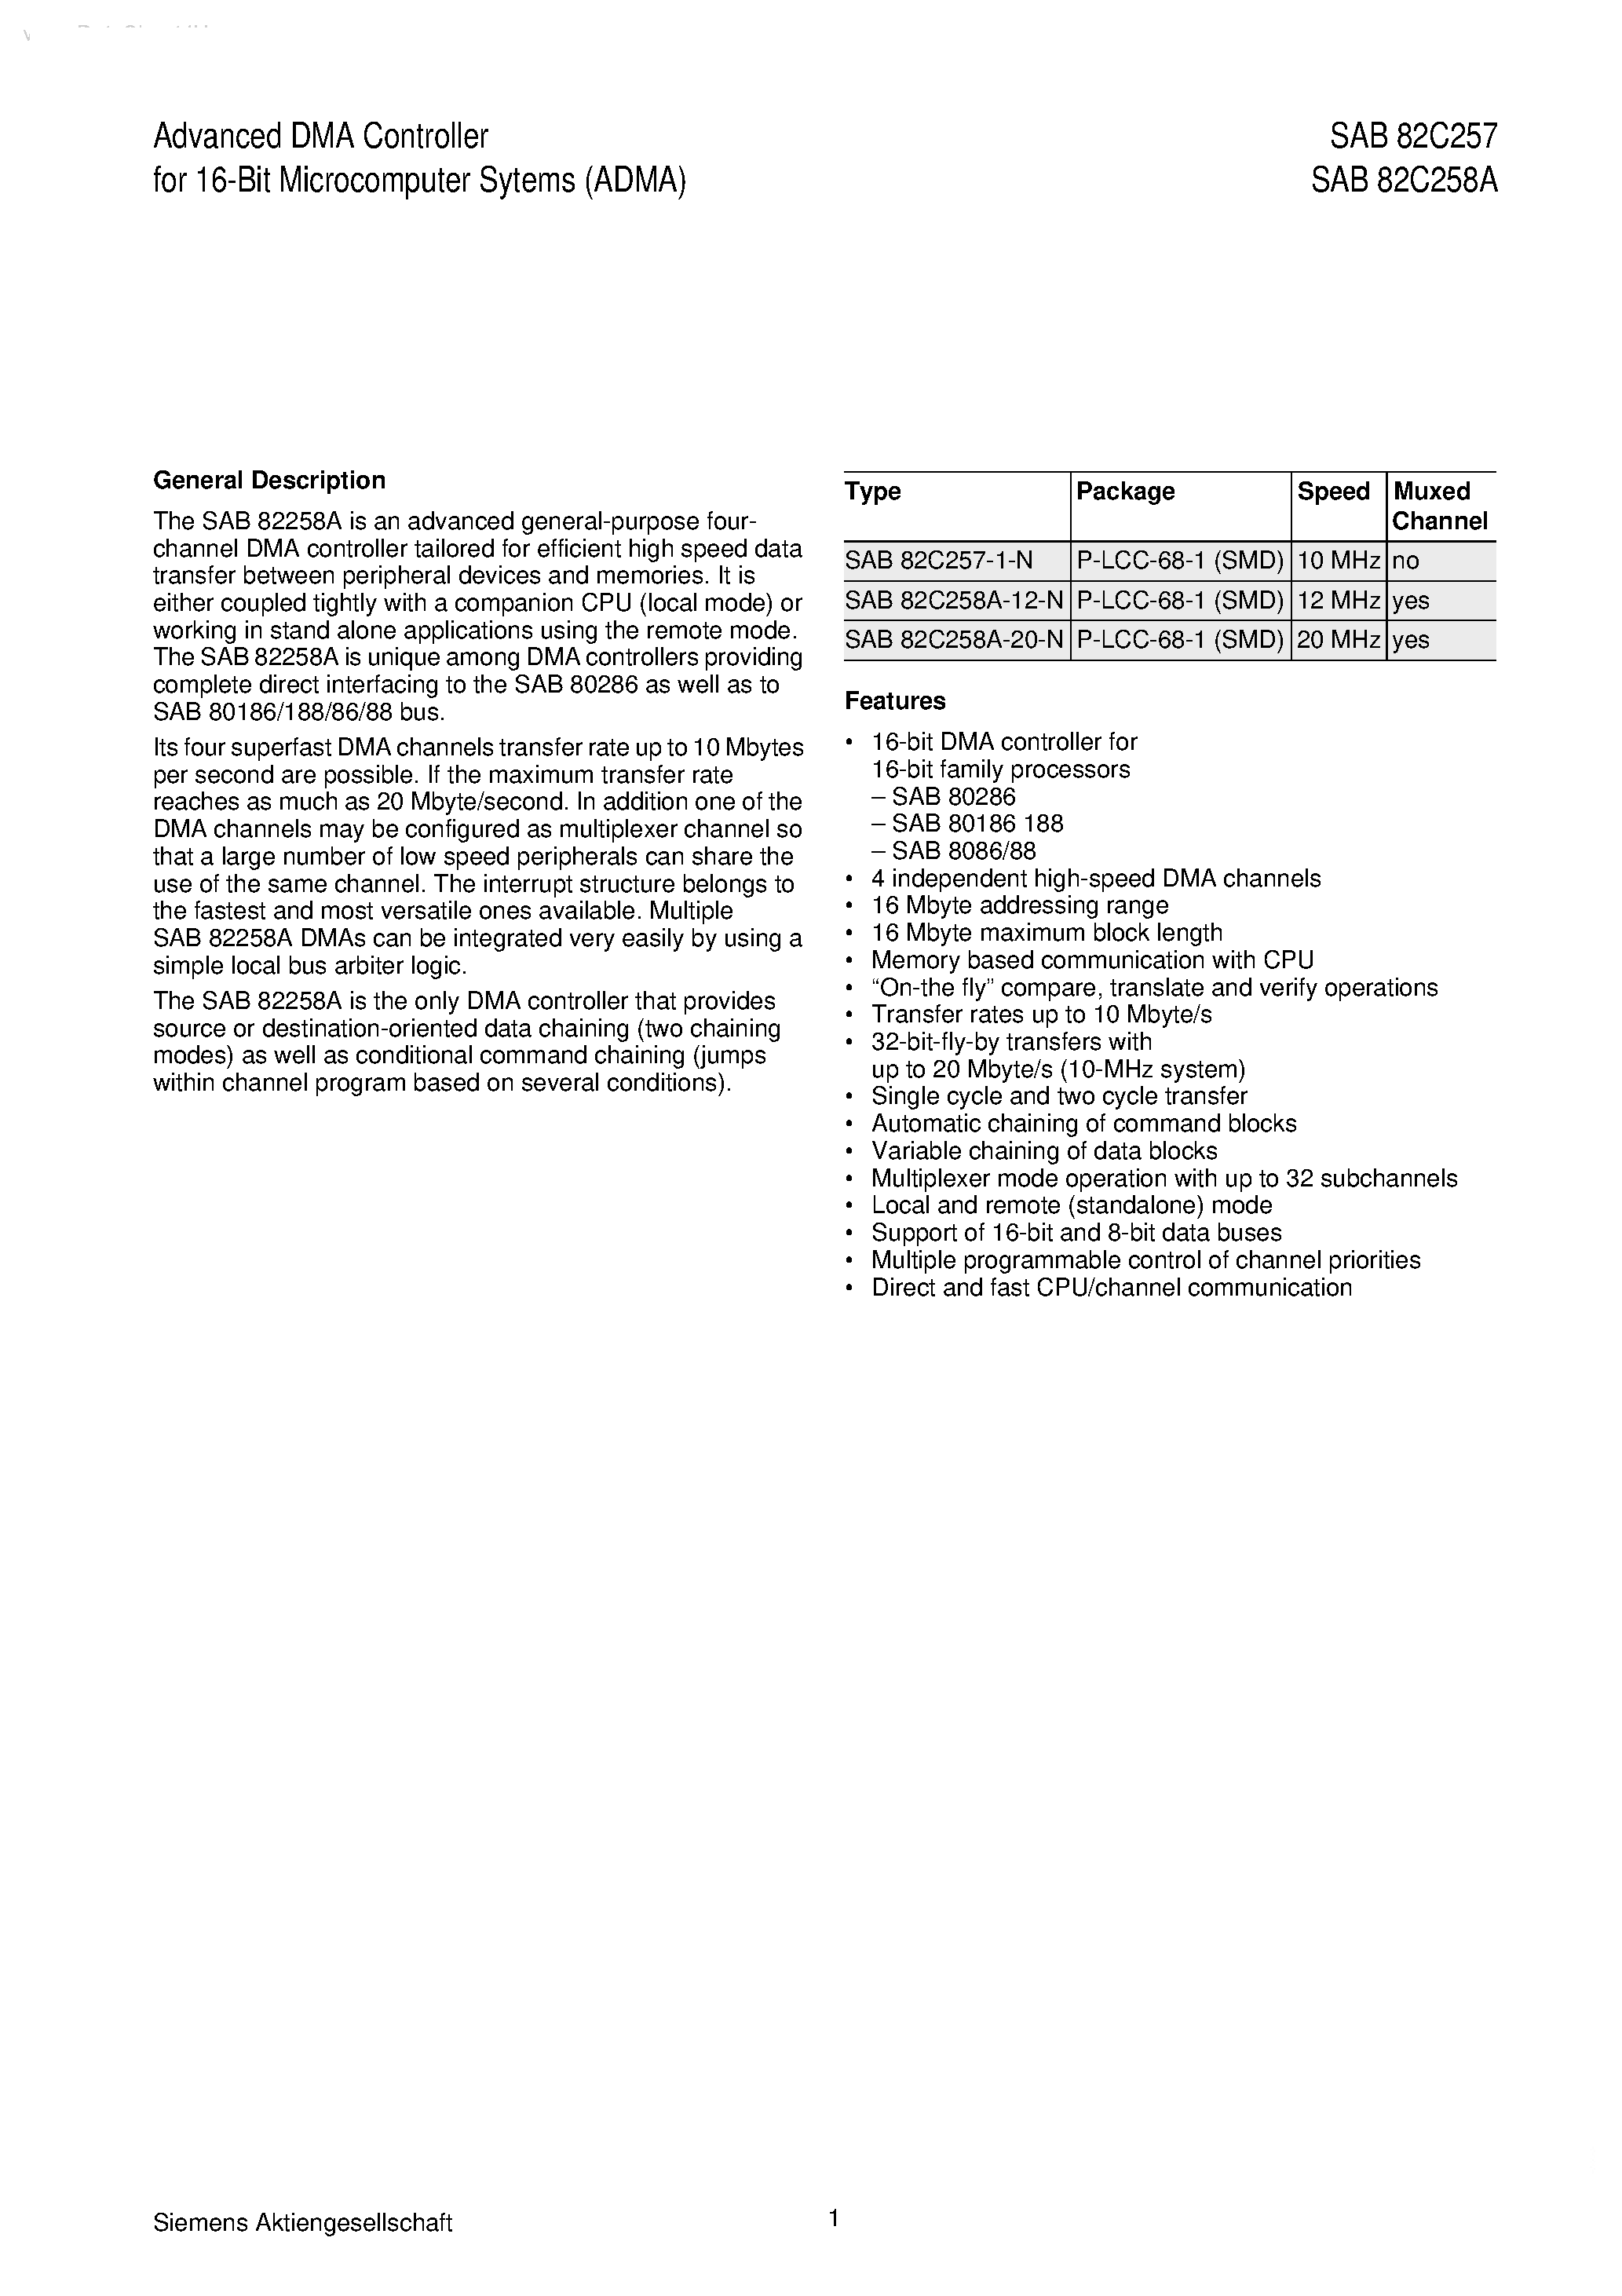 Datasheet SAB82C257-1-N - (SAB82C25x-x-N) Advanced DMA Controller page 1